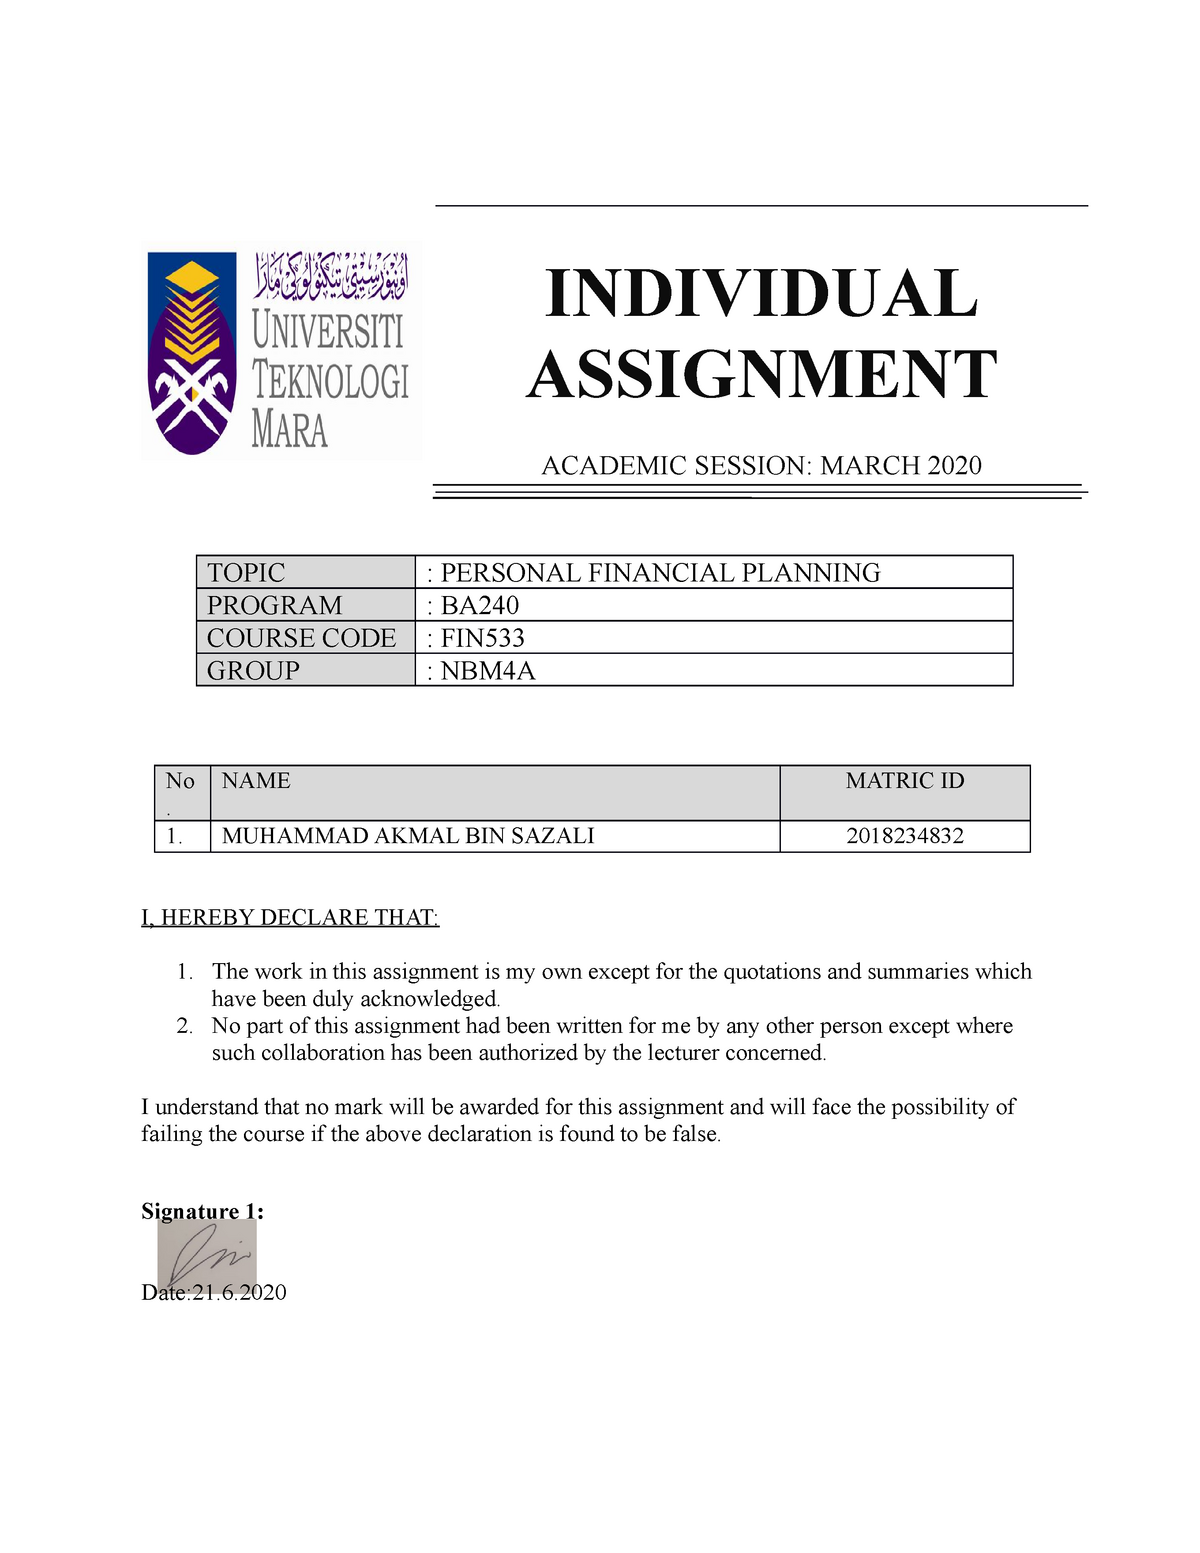 FIN533 Individual Assignment - Muhammad Akmal bin Sazali (2018 234832